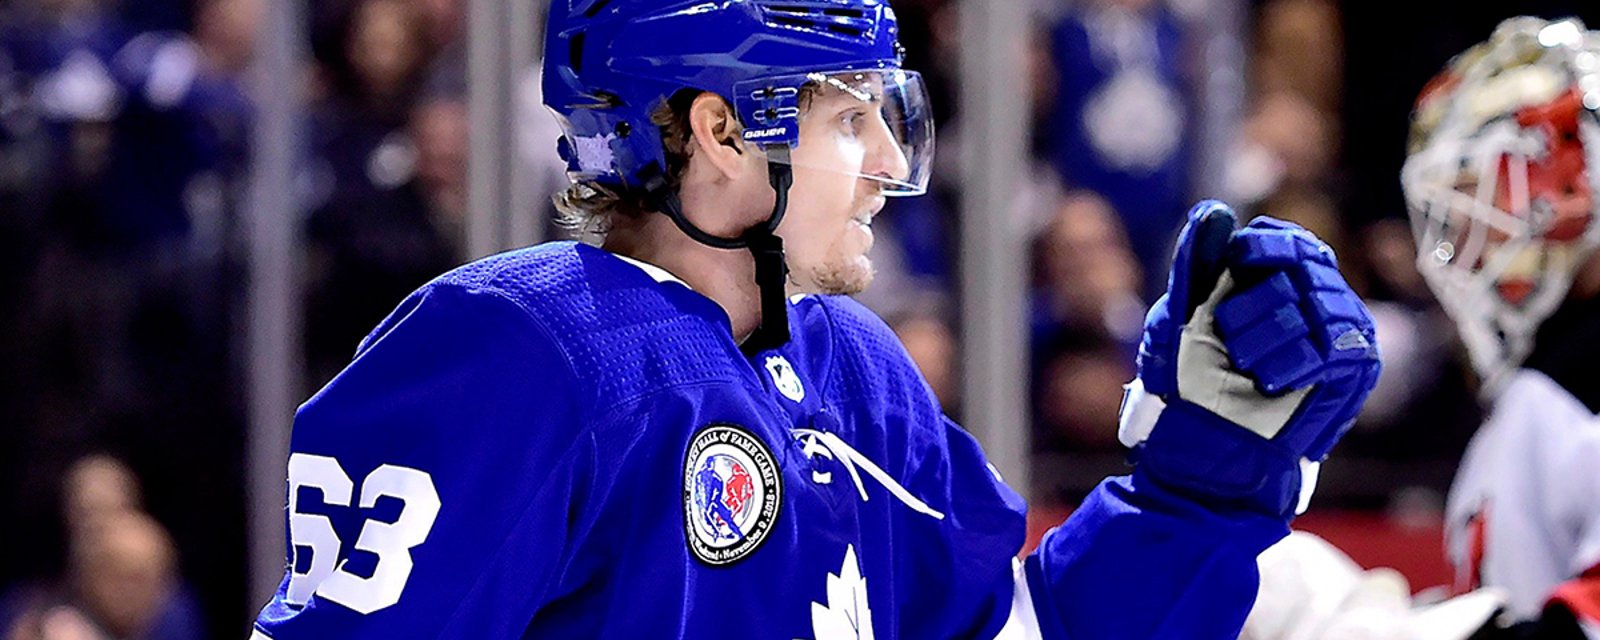 Leafs’ Ennis rewarded for comeback season, earns nomination for major NHL award